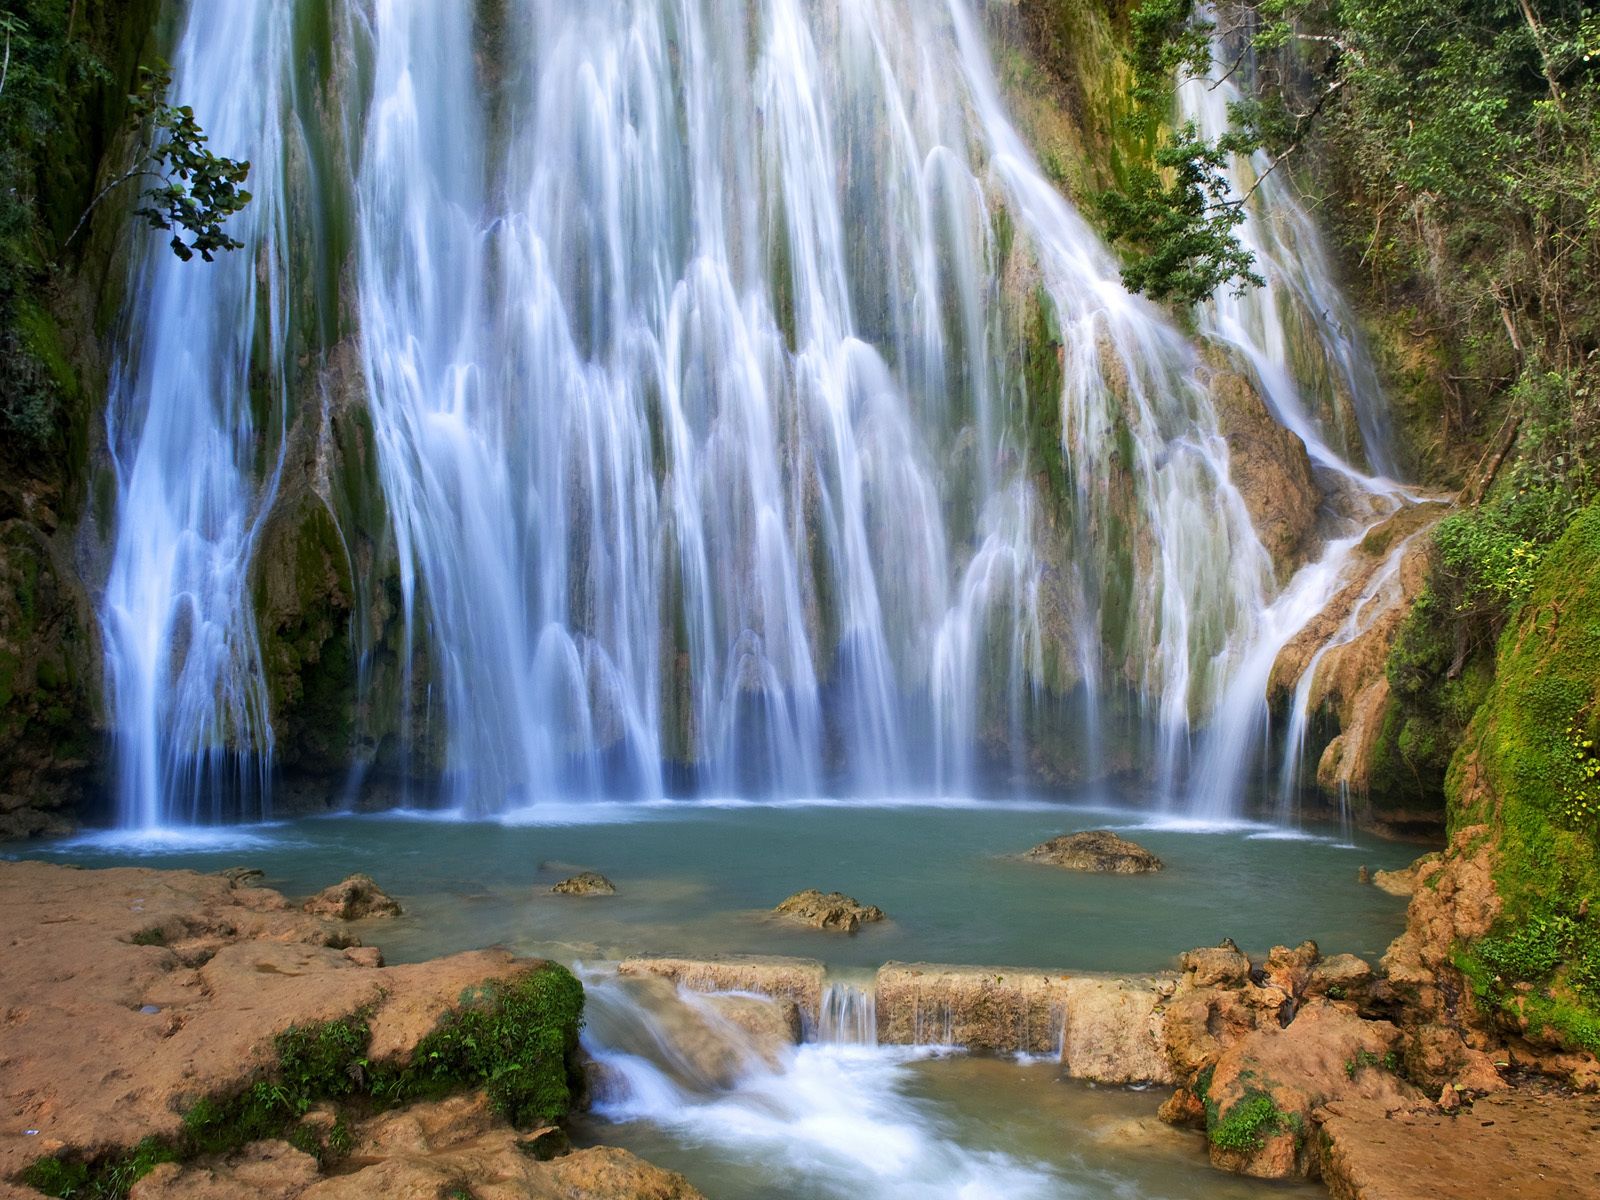 punta cana waterfall tours